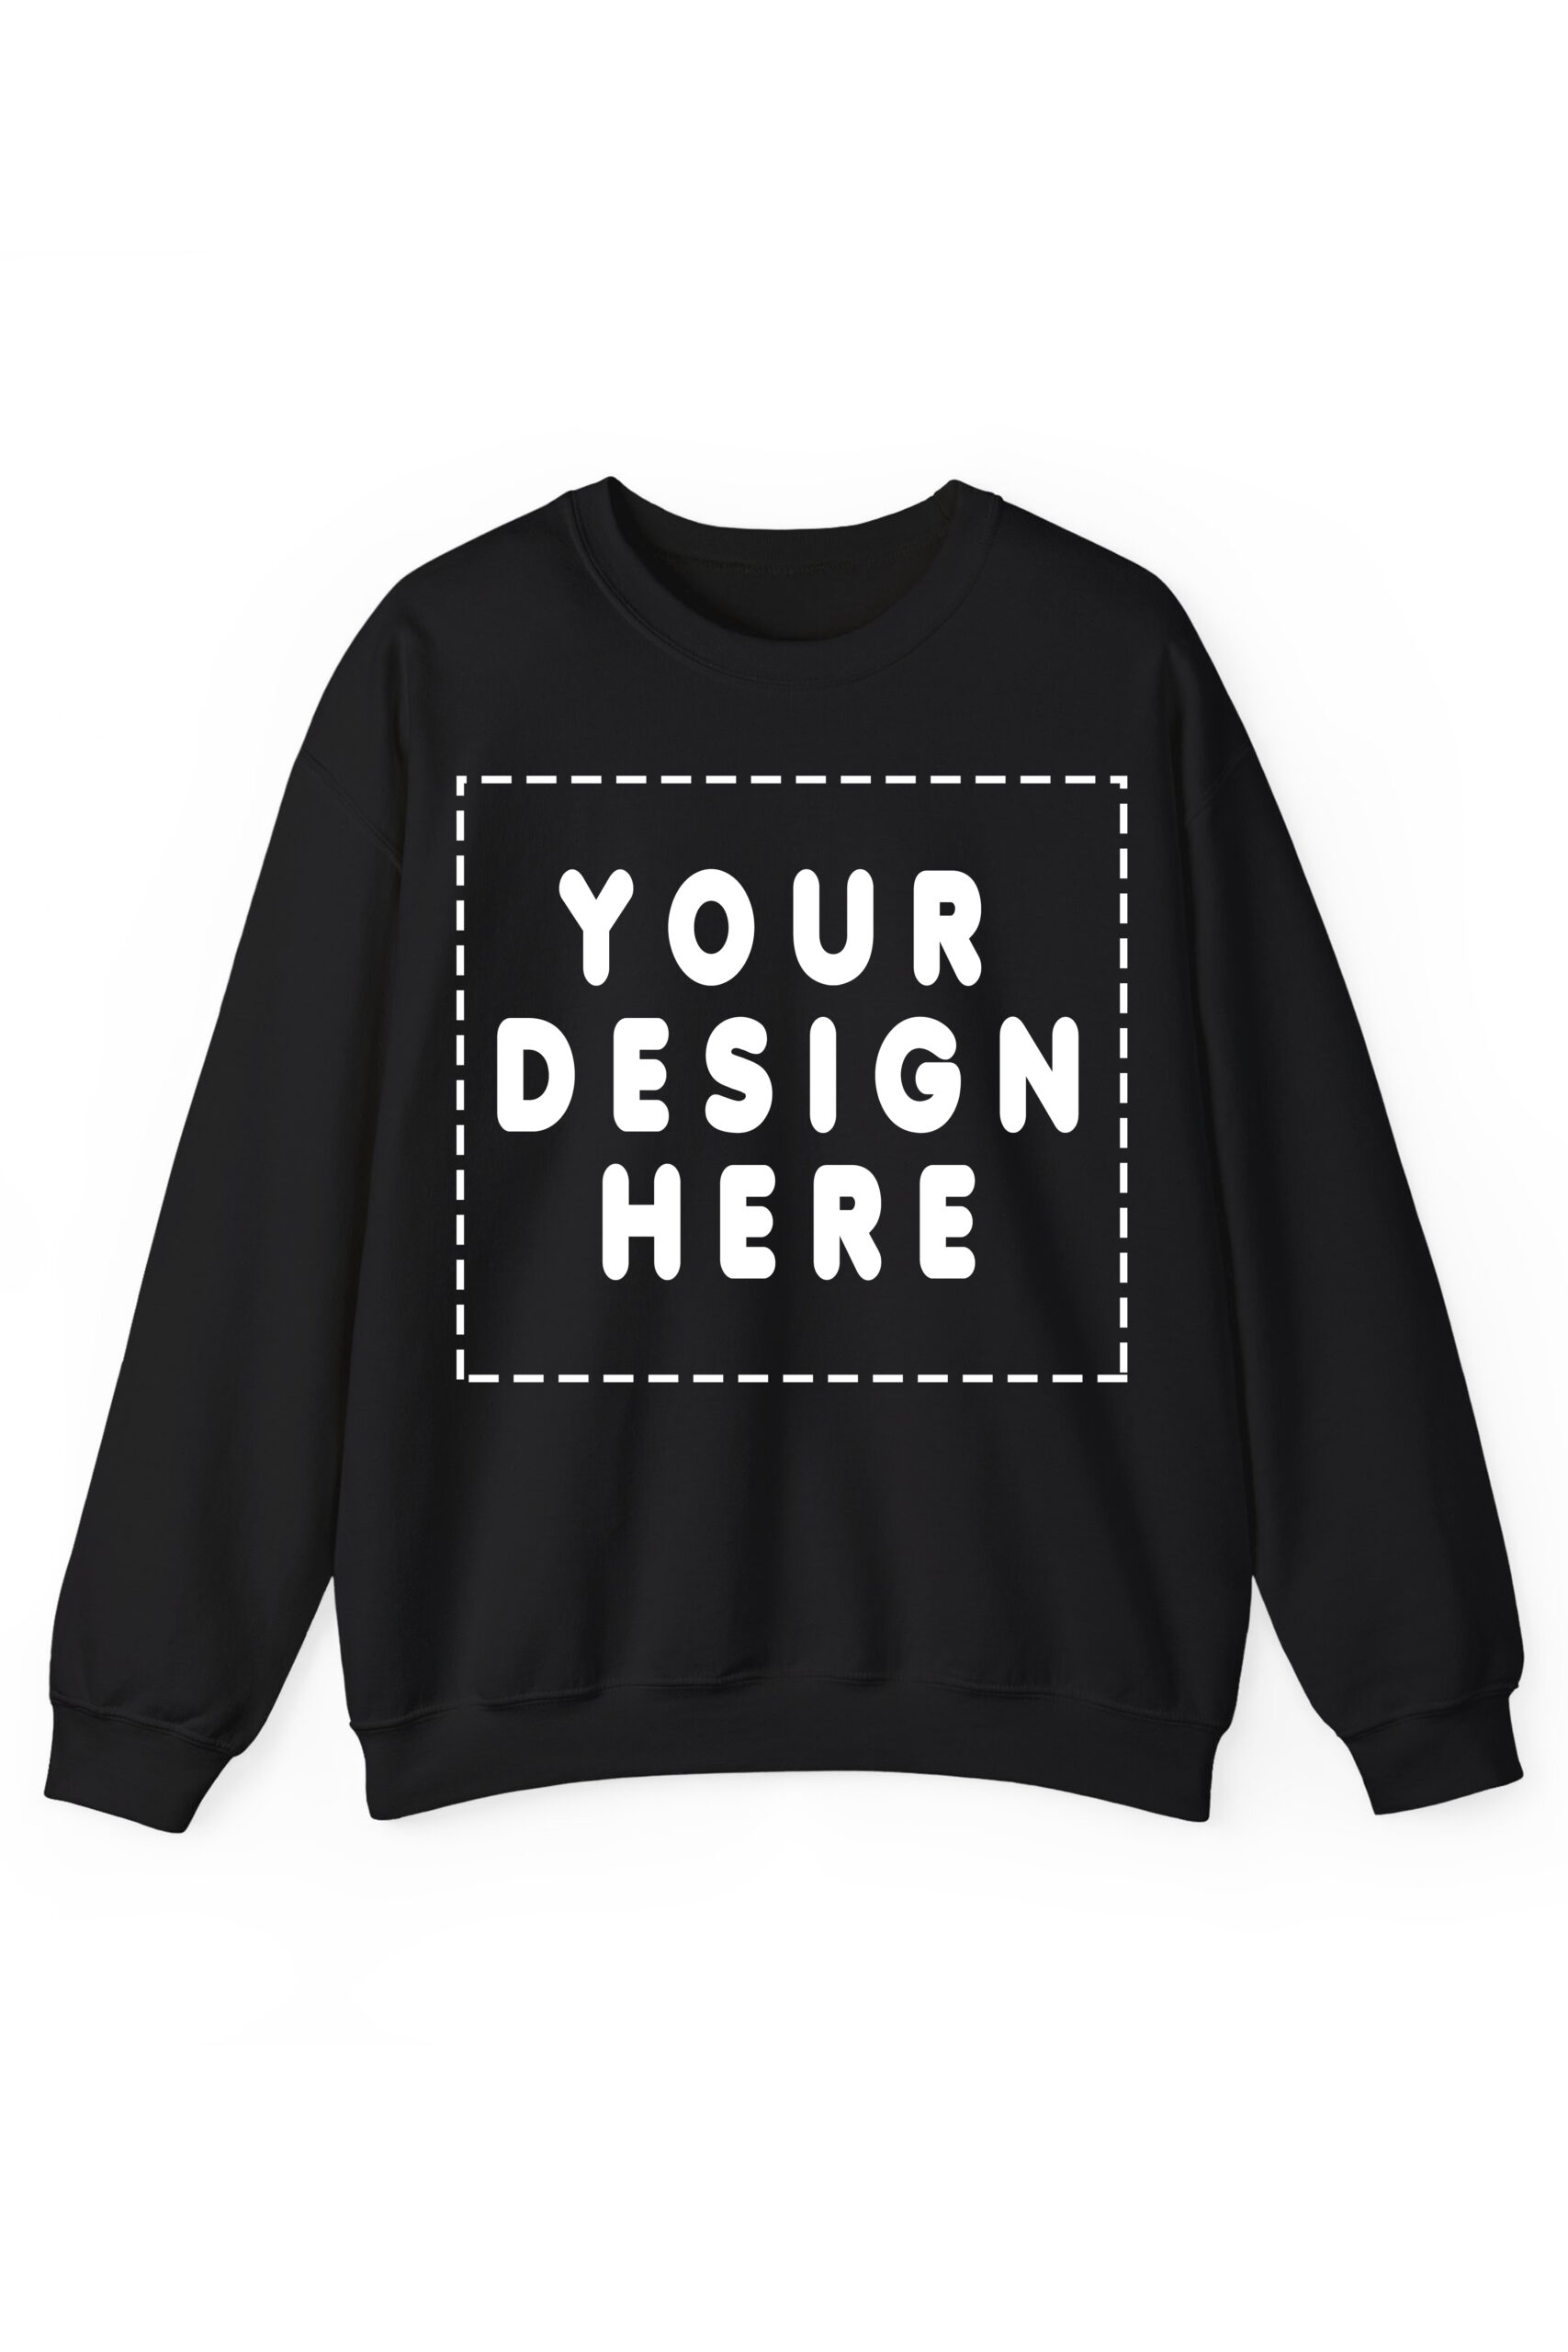 Custom Sweater - Personalized Sweatshirt